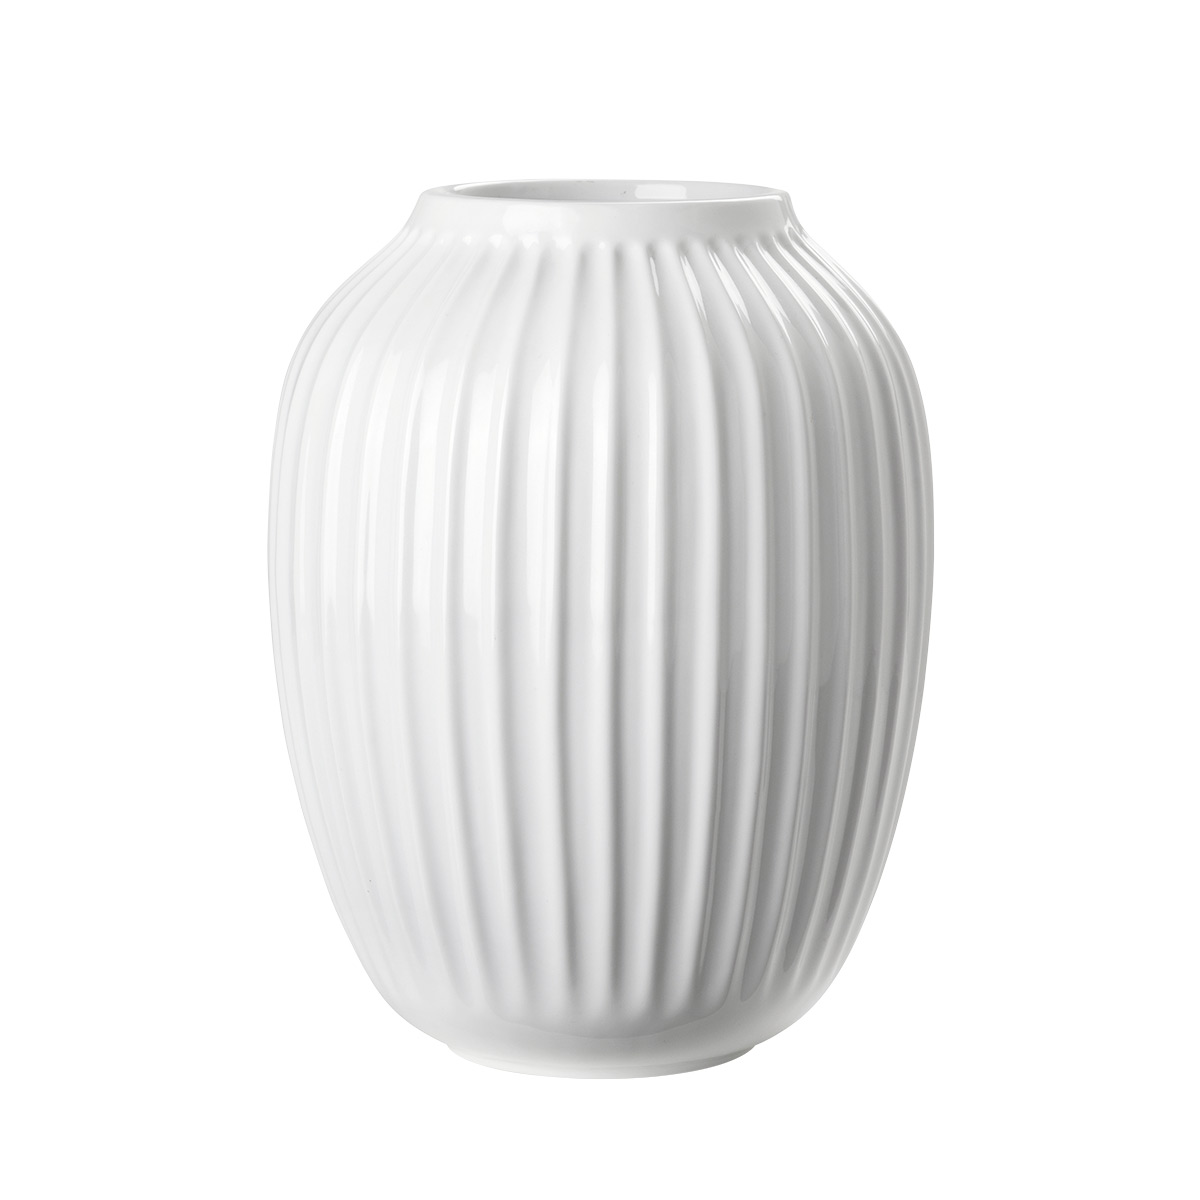 Kahler Hammershoi Porcelain Vase | The Container Store